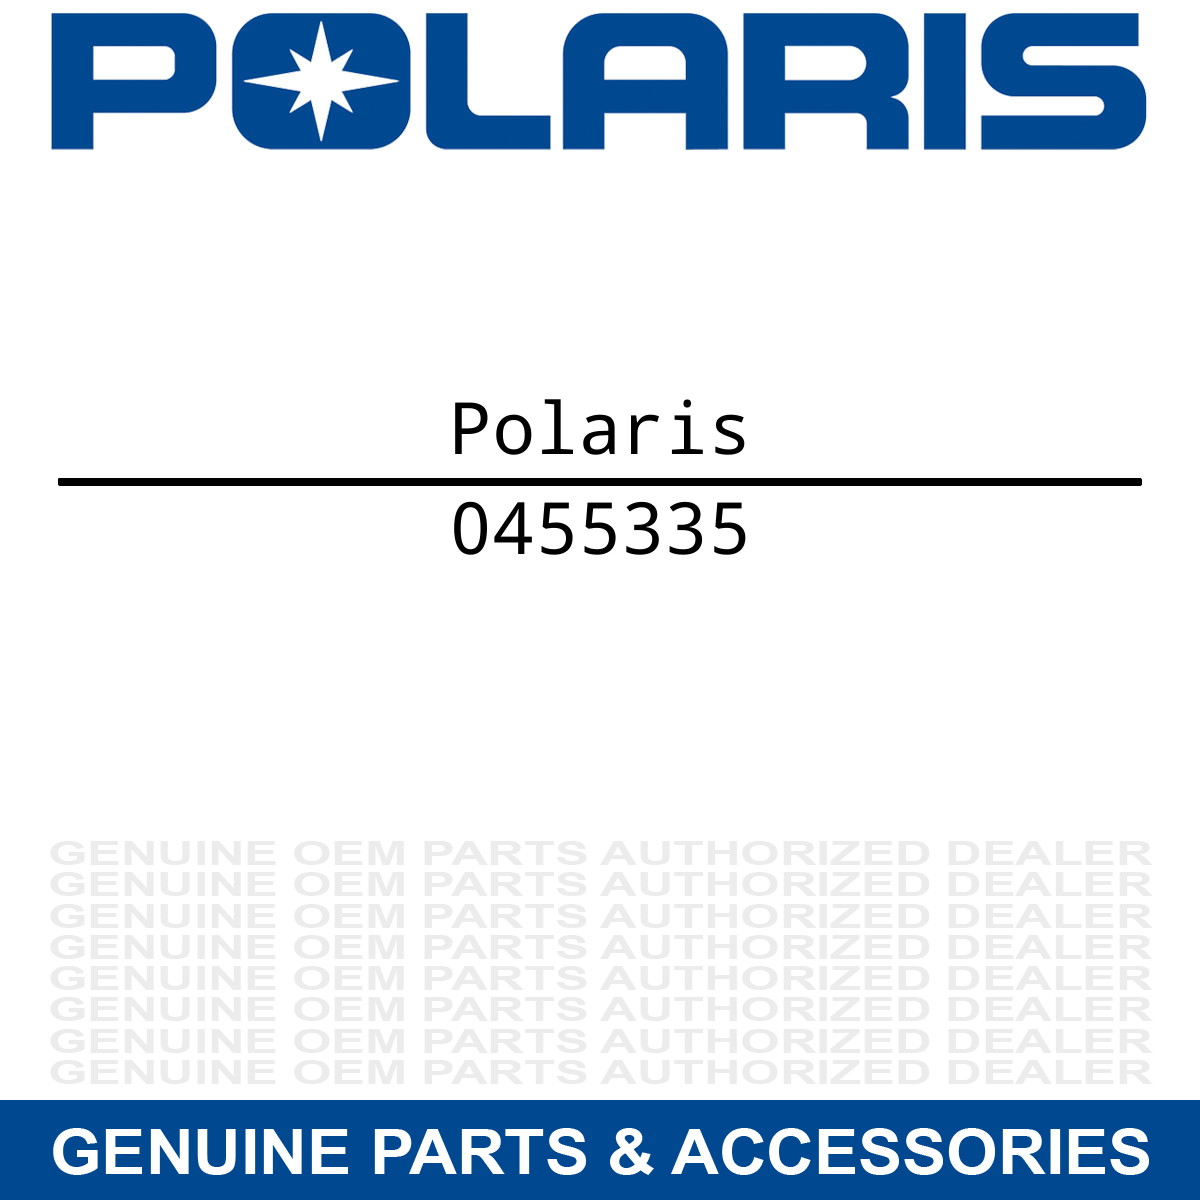 Polaris 0455335 Gaskets & Rebuild Kits Sportsman Predator Outlaw 50 90